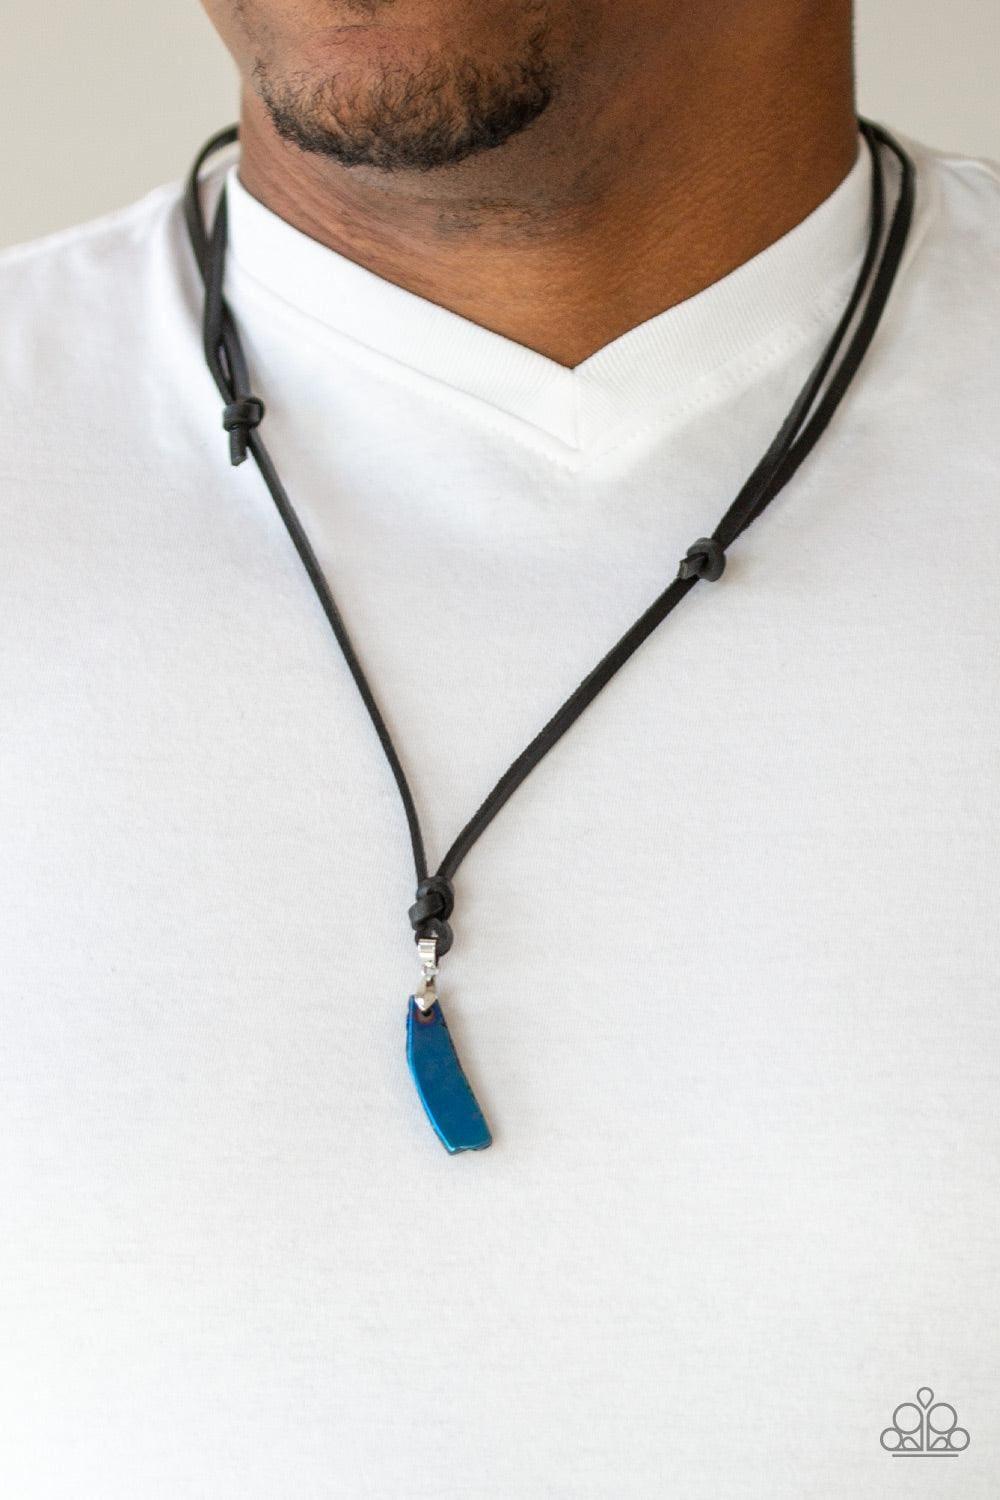 Paparazzi Accessories - Am i Meteorite? - Blue Urban Necklace - Bling by JessieK